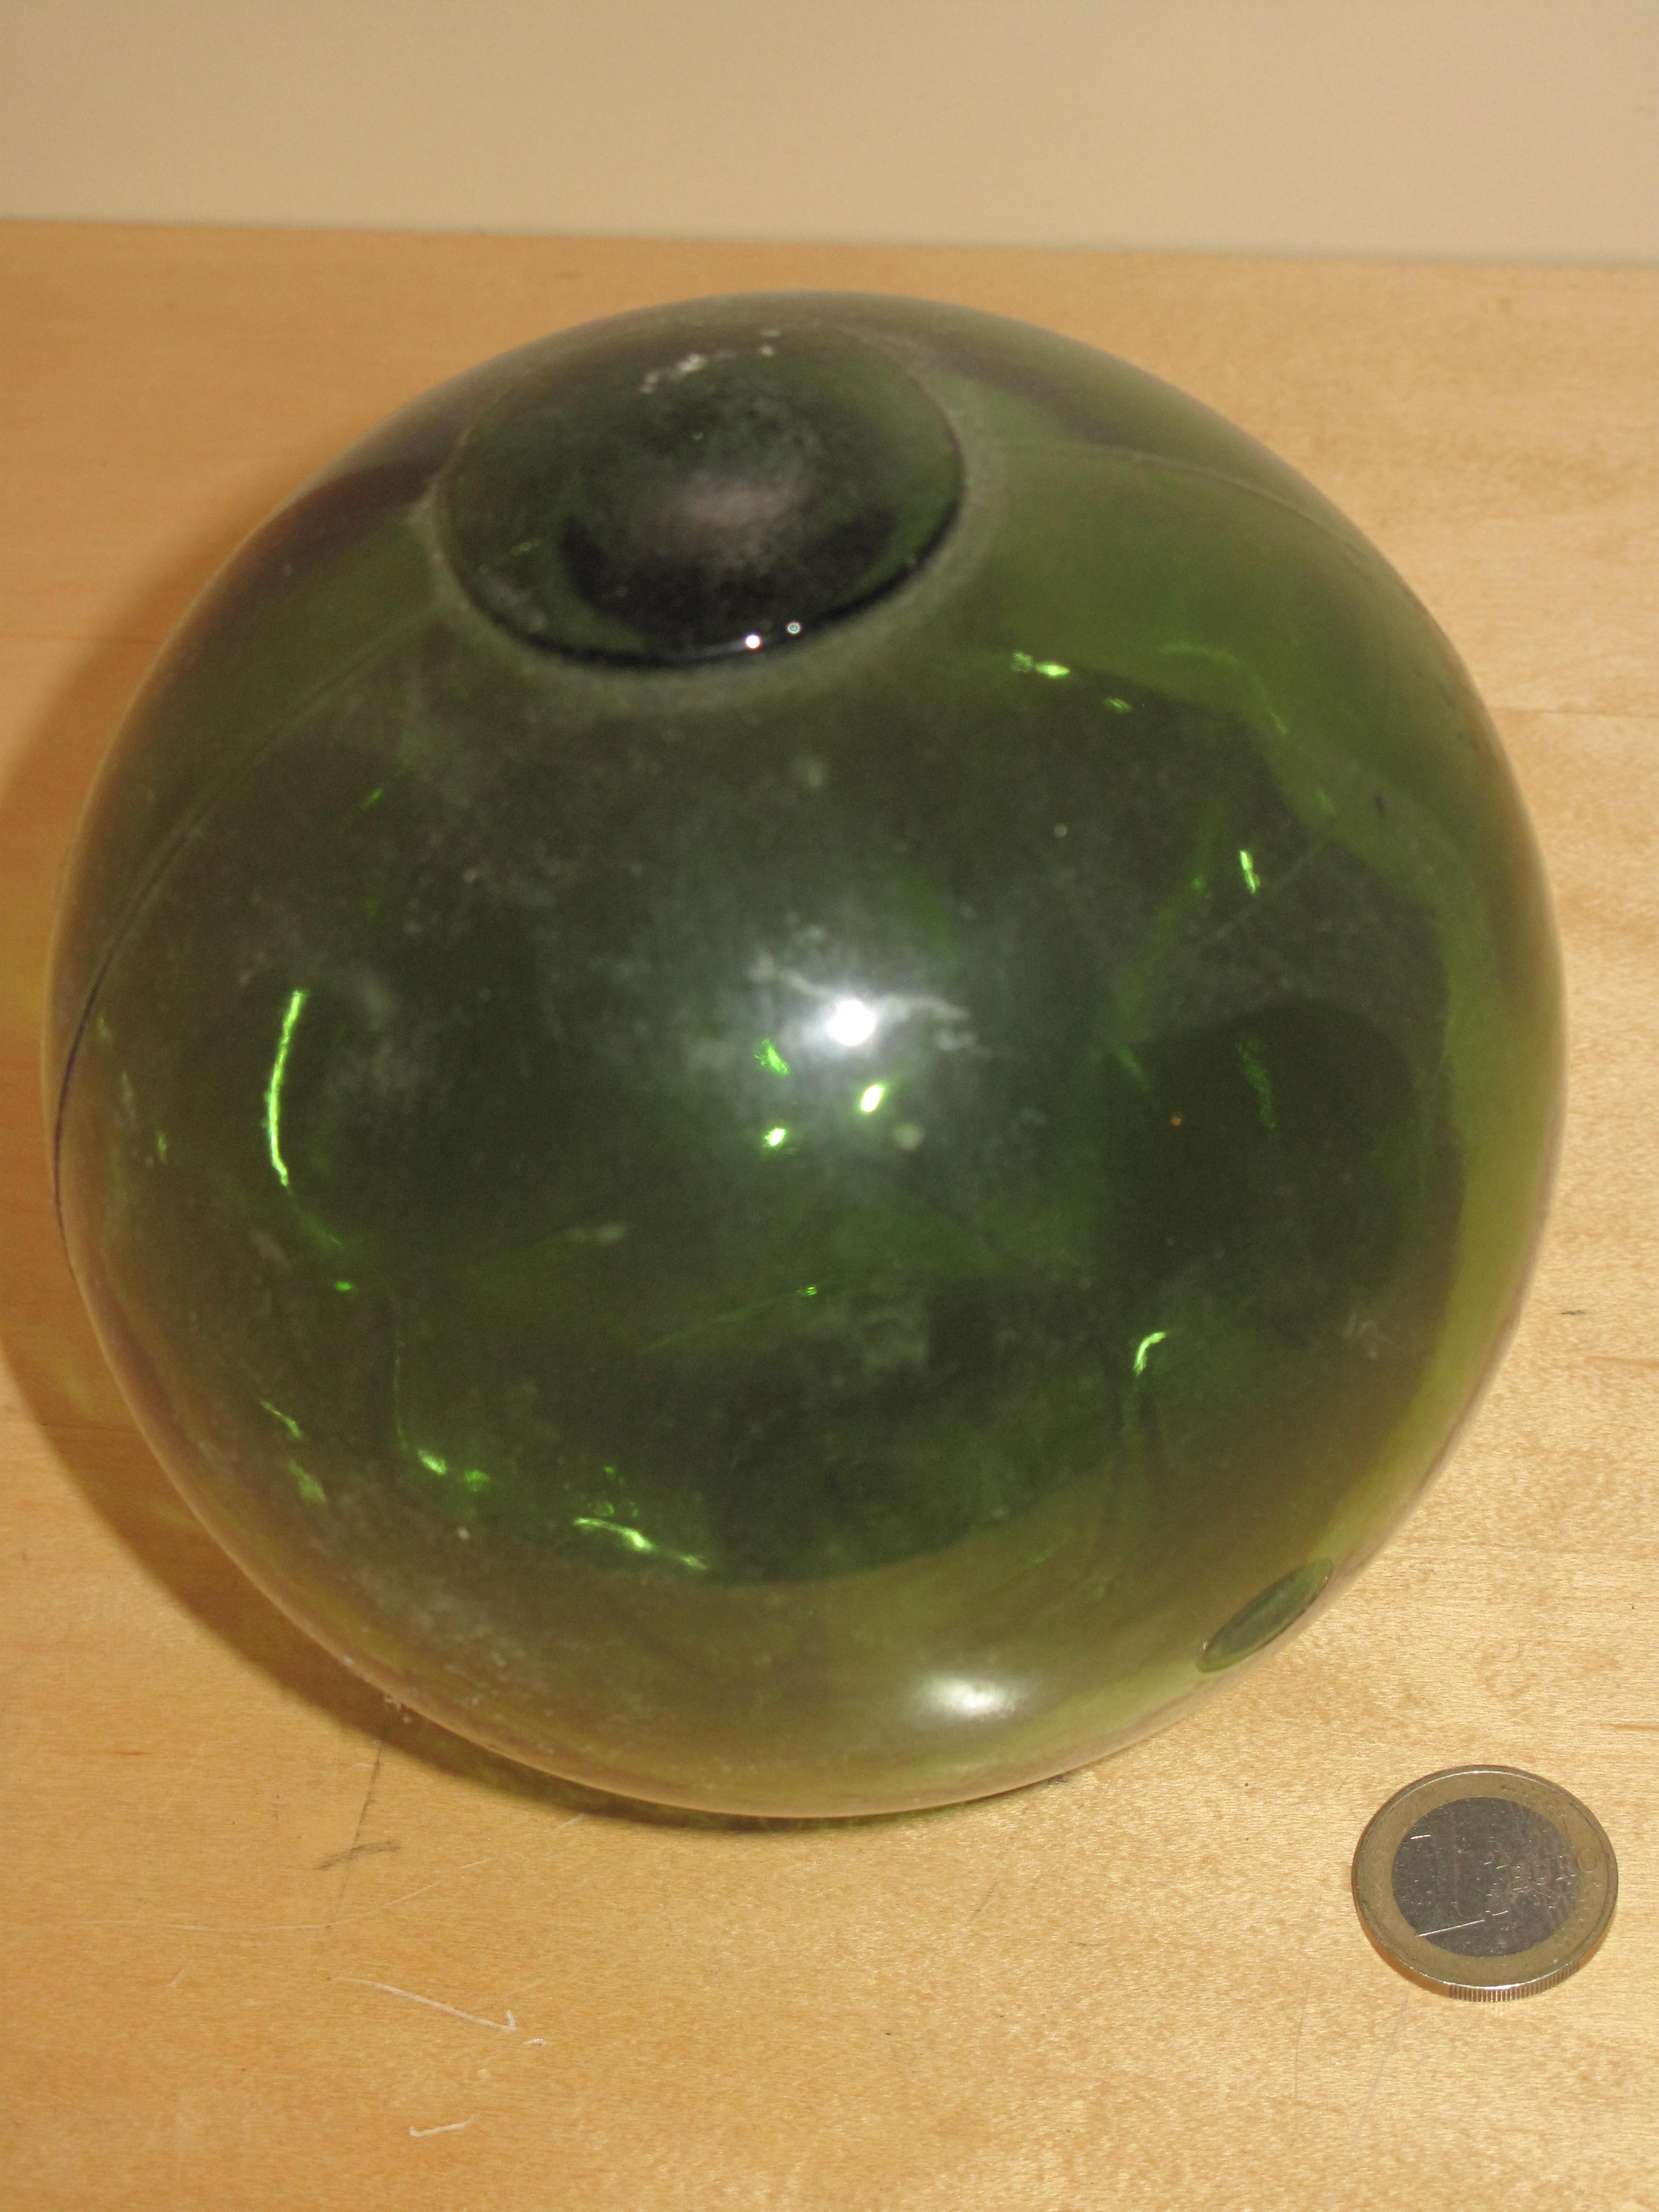 File:Fishing ball.jpg - Wikimedia Commons